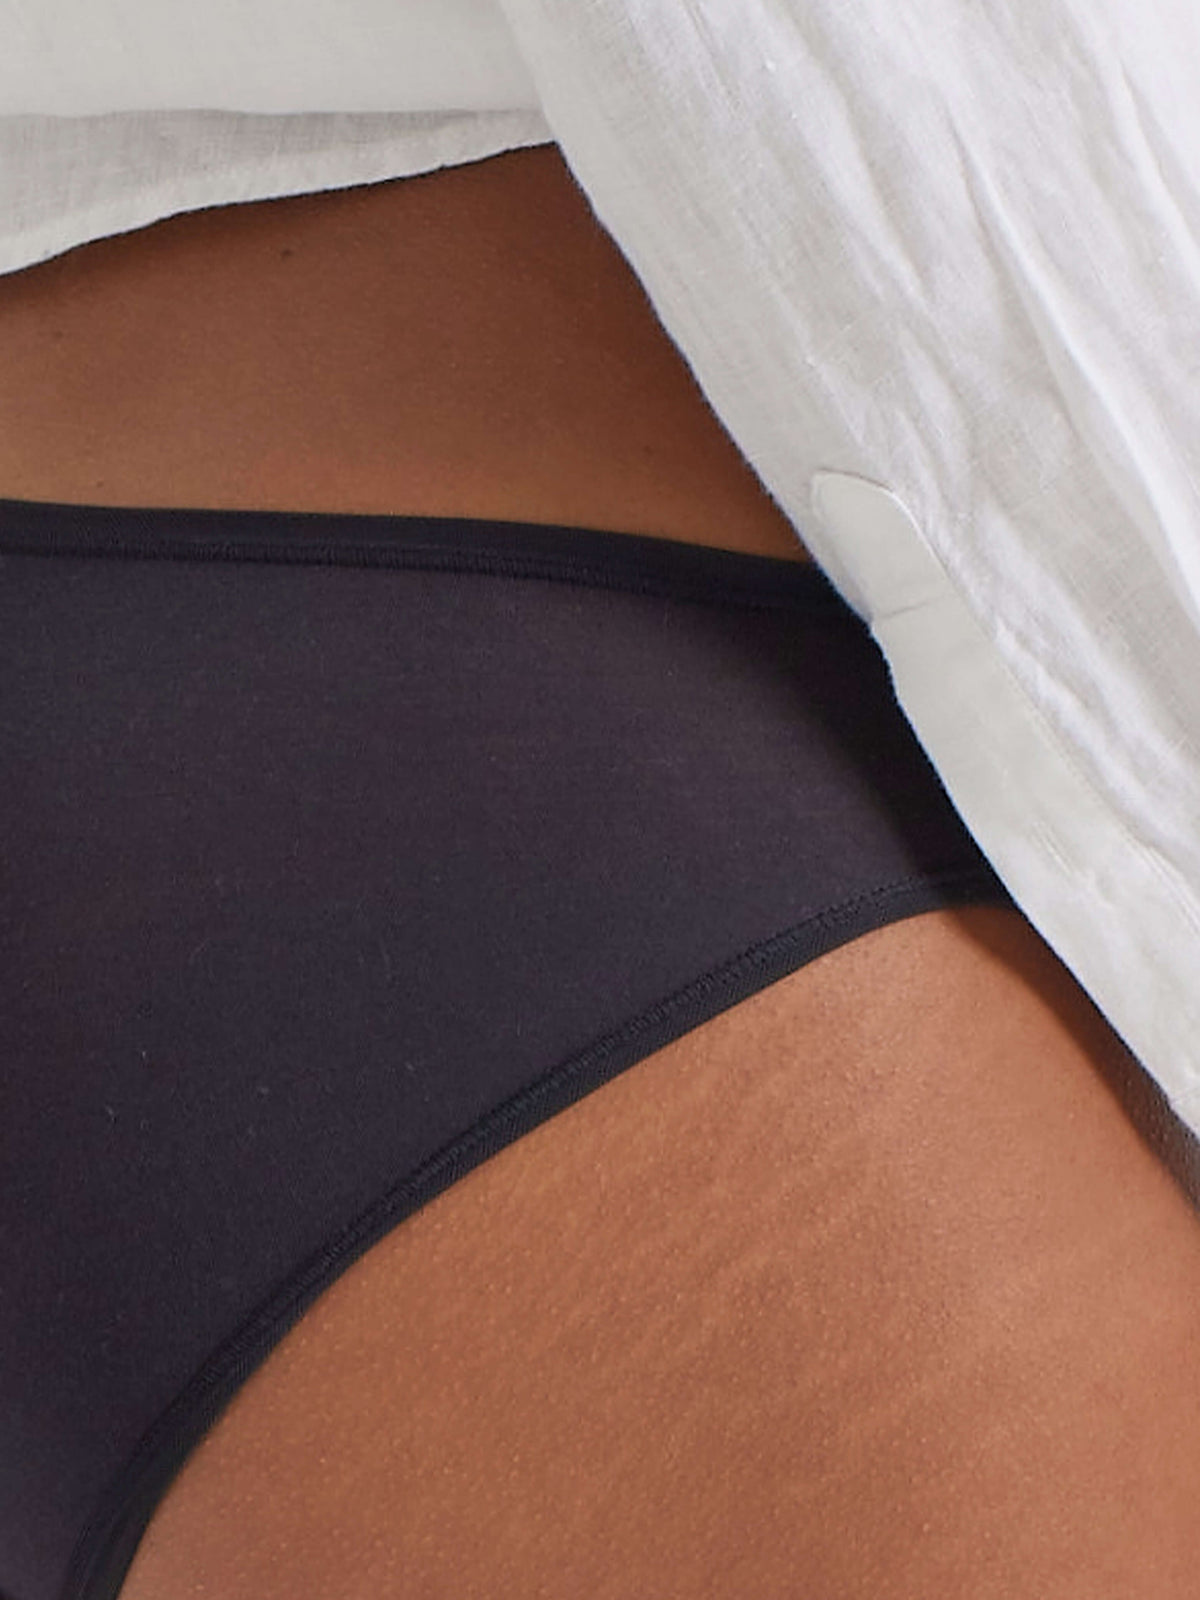 Pure Cotton Black Bikini Underwear by Kayser Lingerie